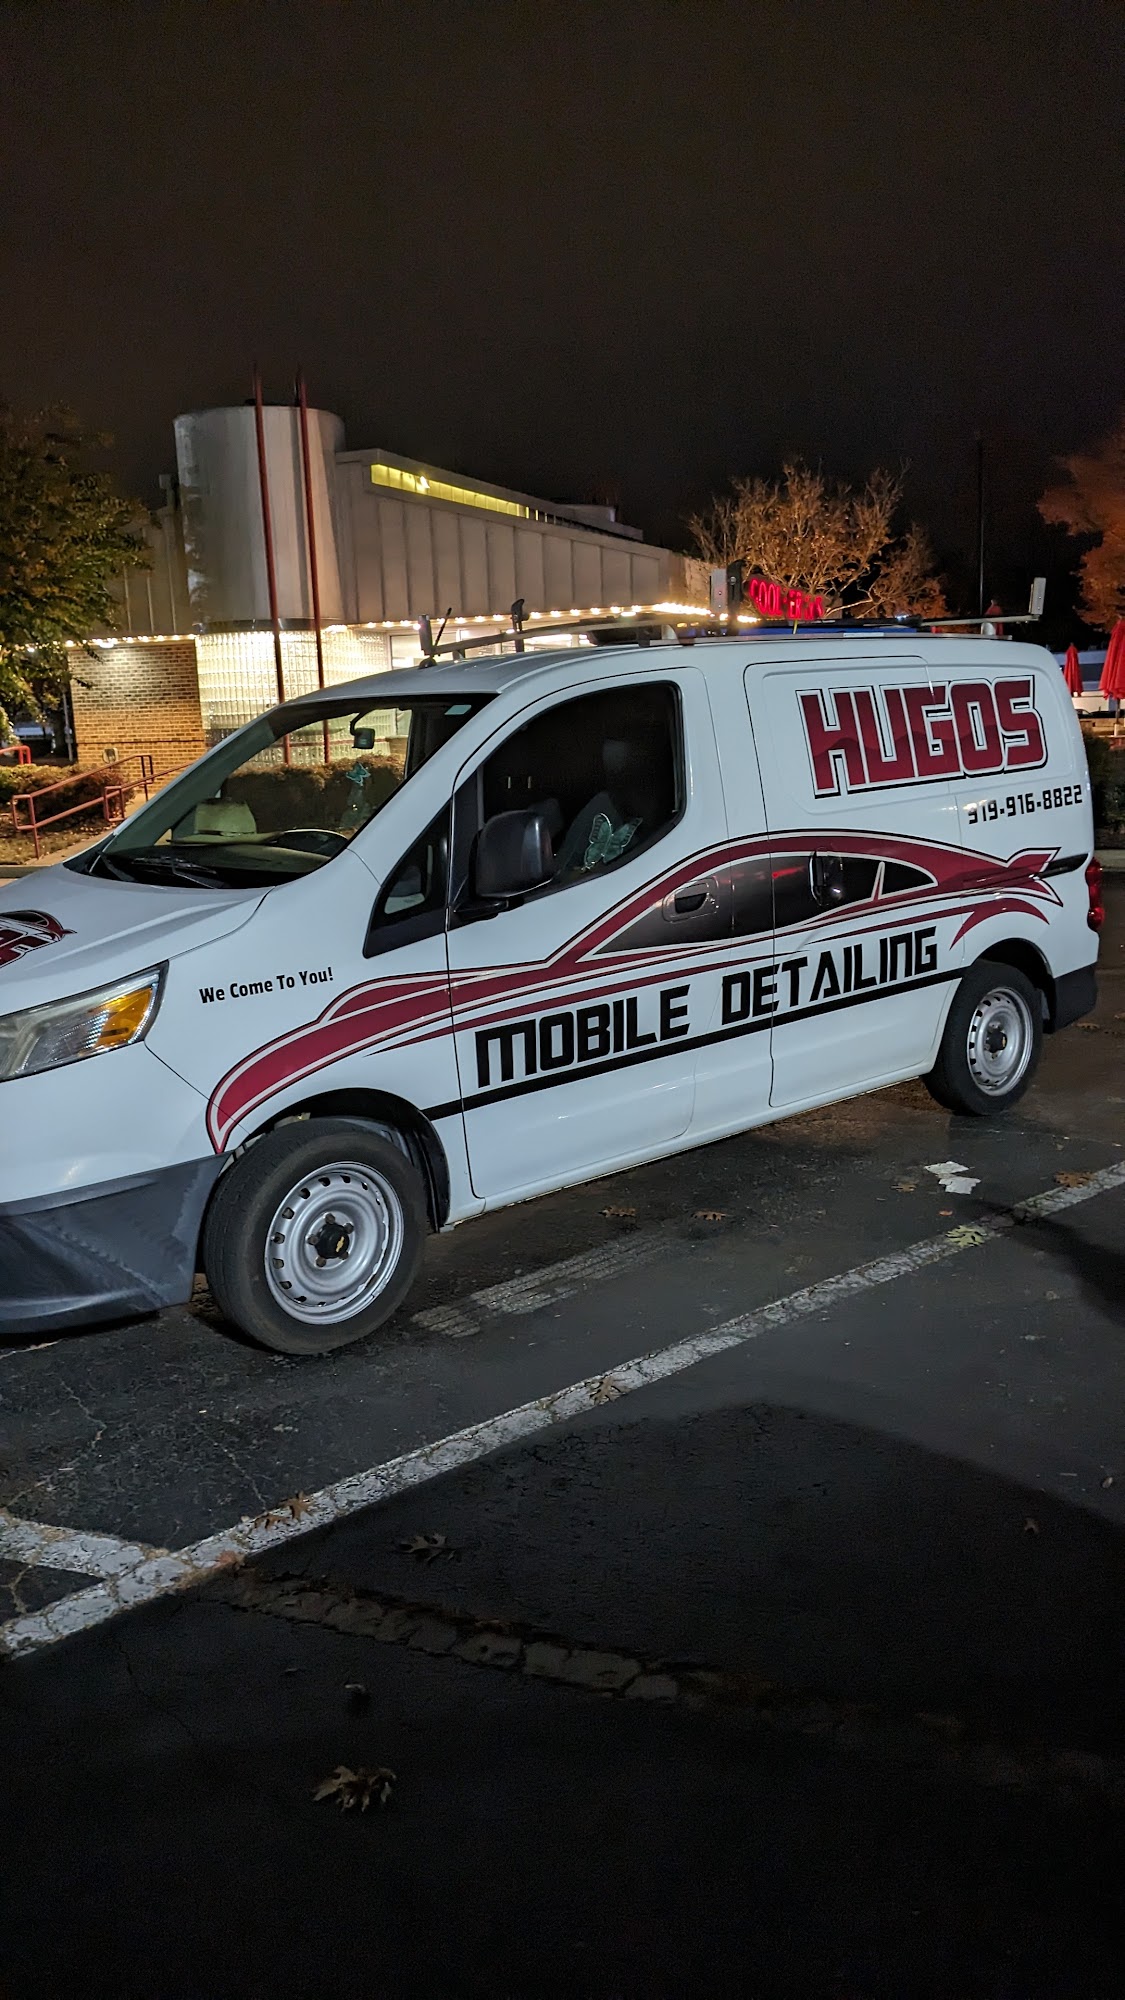 Hugo's Mobile Detailing 207b George St, Four Oaks North Carolina 27524